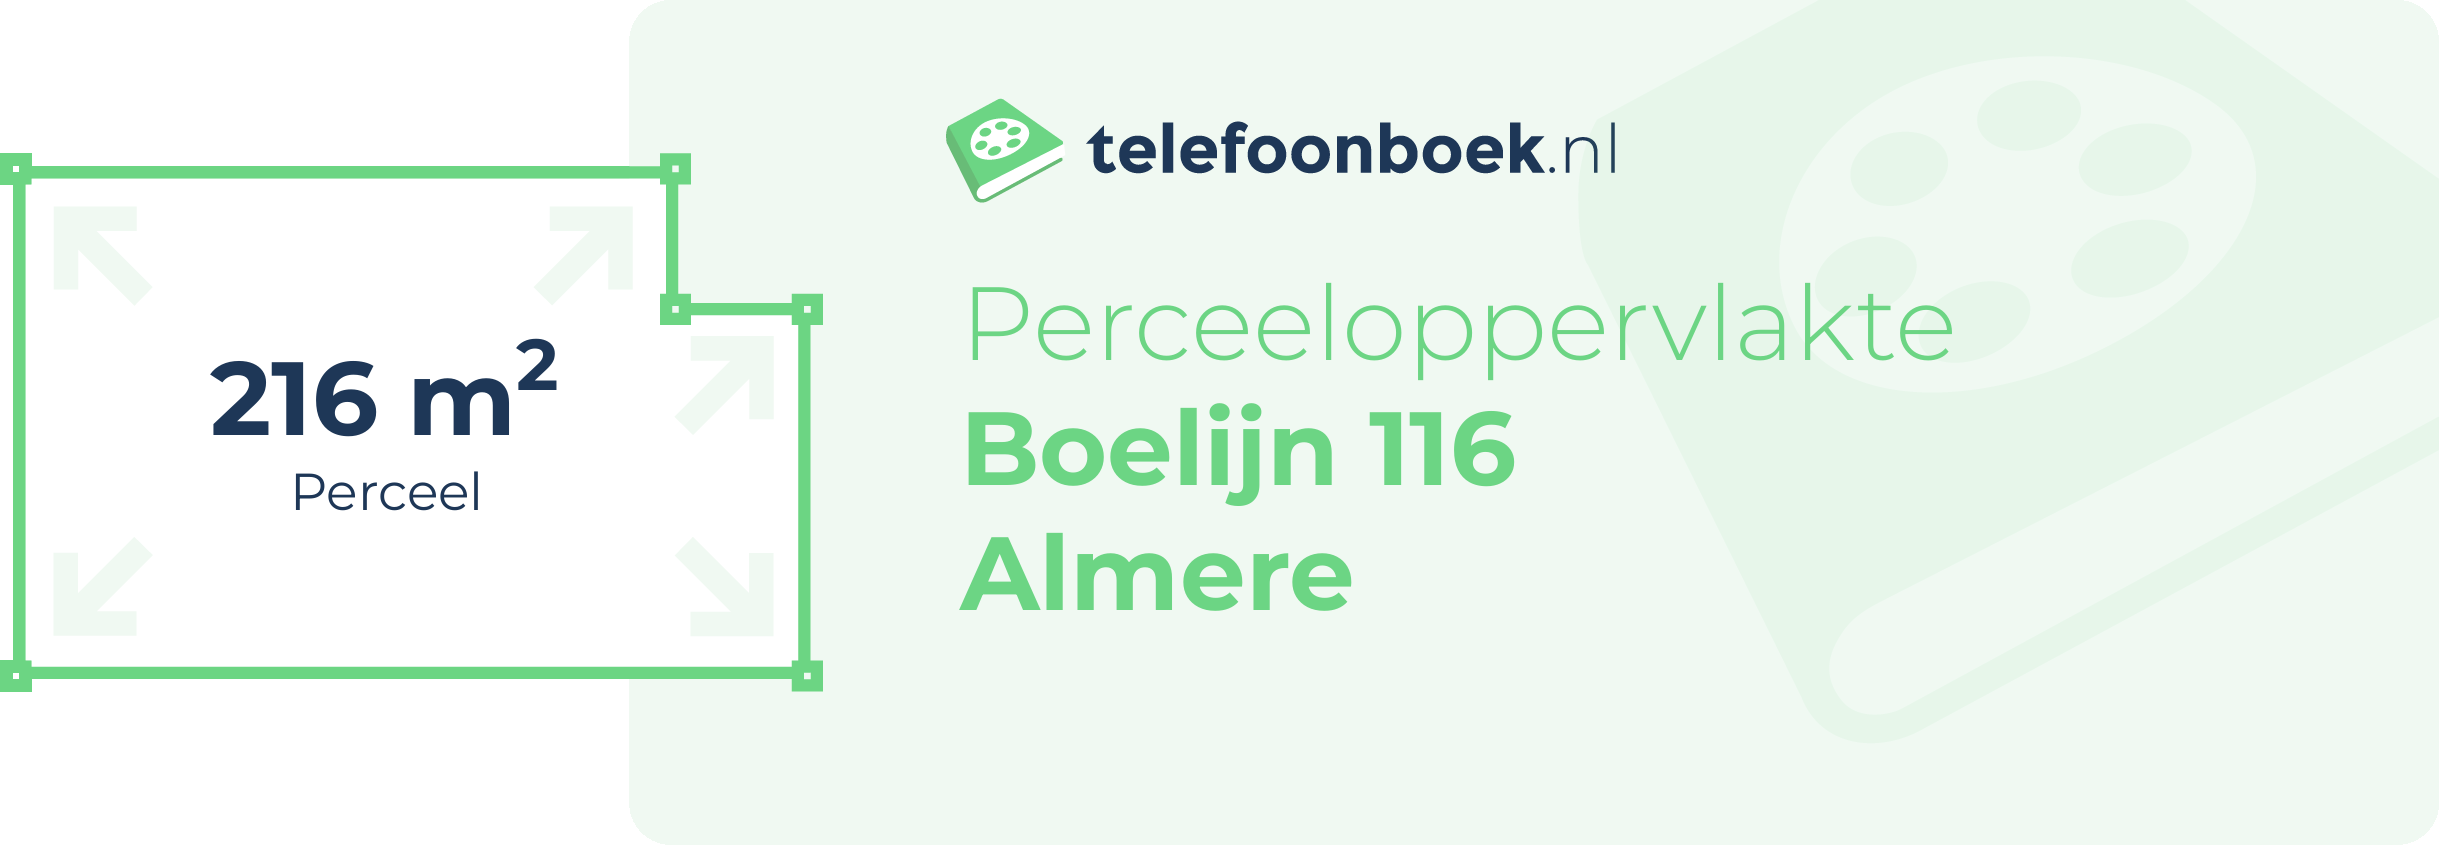 Perceeloppervlakte Boelijn 116 Almere